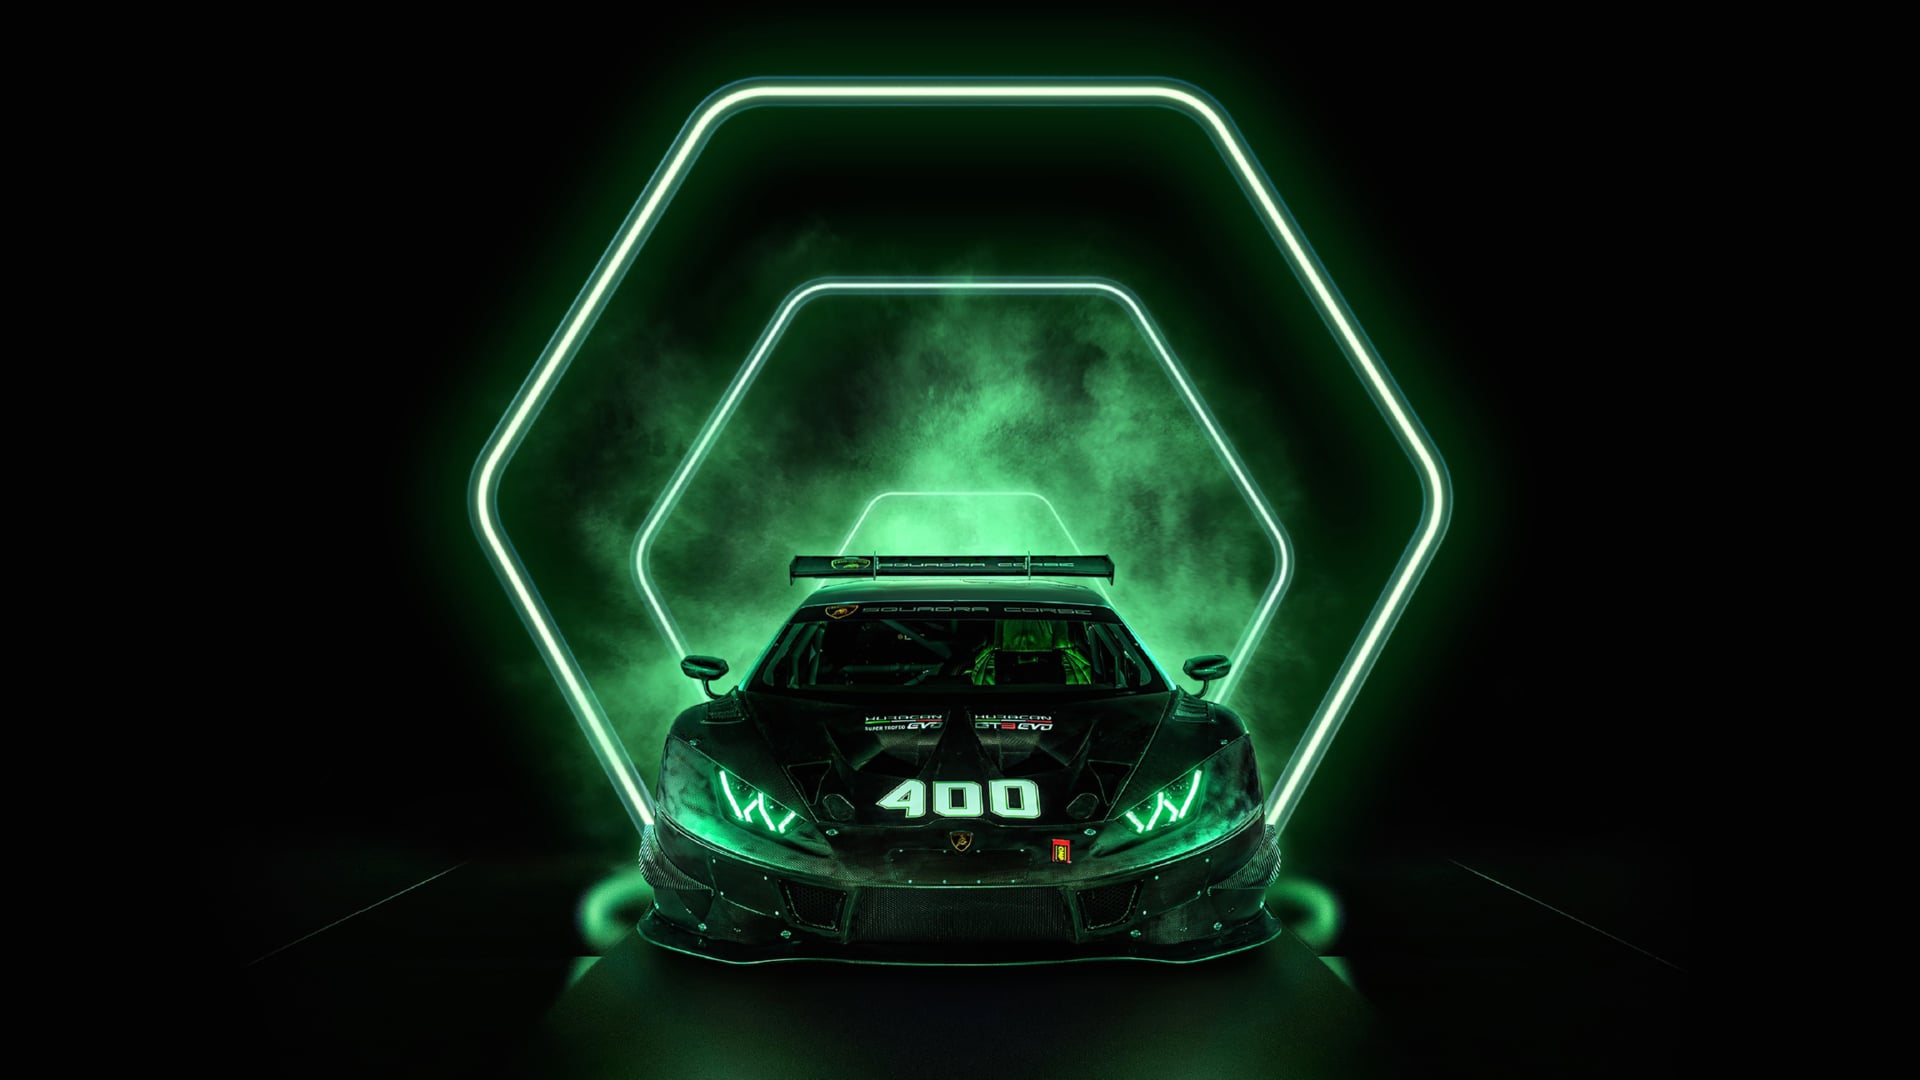 Lamborghini Huracán Squadra Corse at 1600 x 1200 size wallpapers HD quality